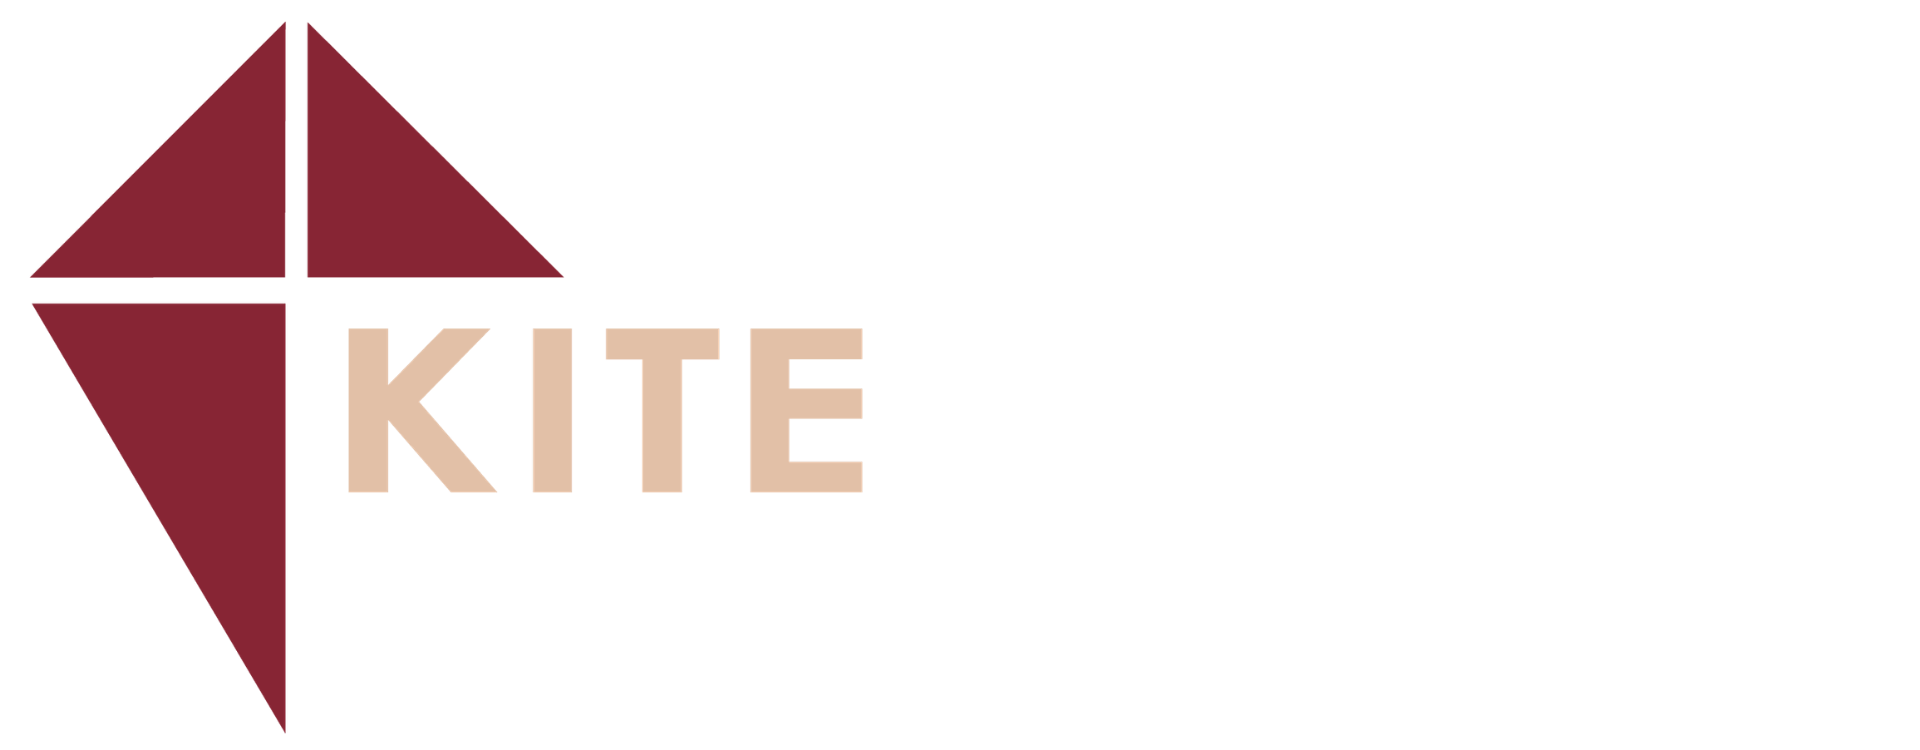 Kite technology logo